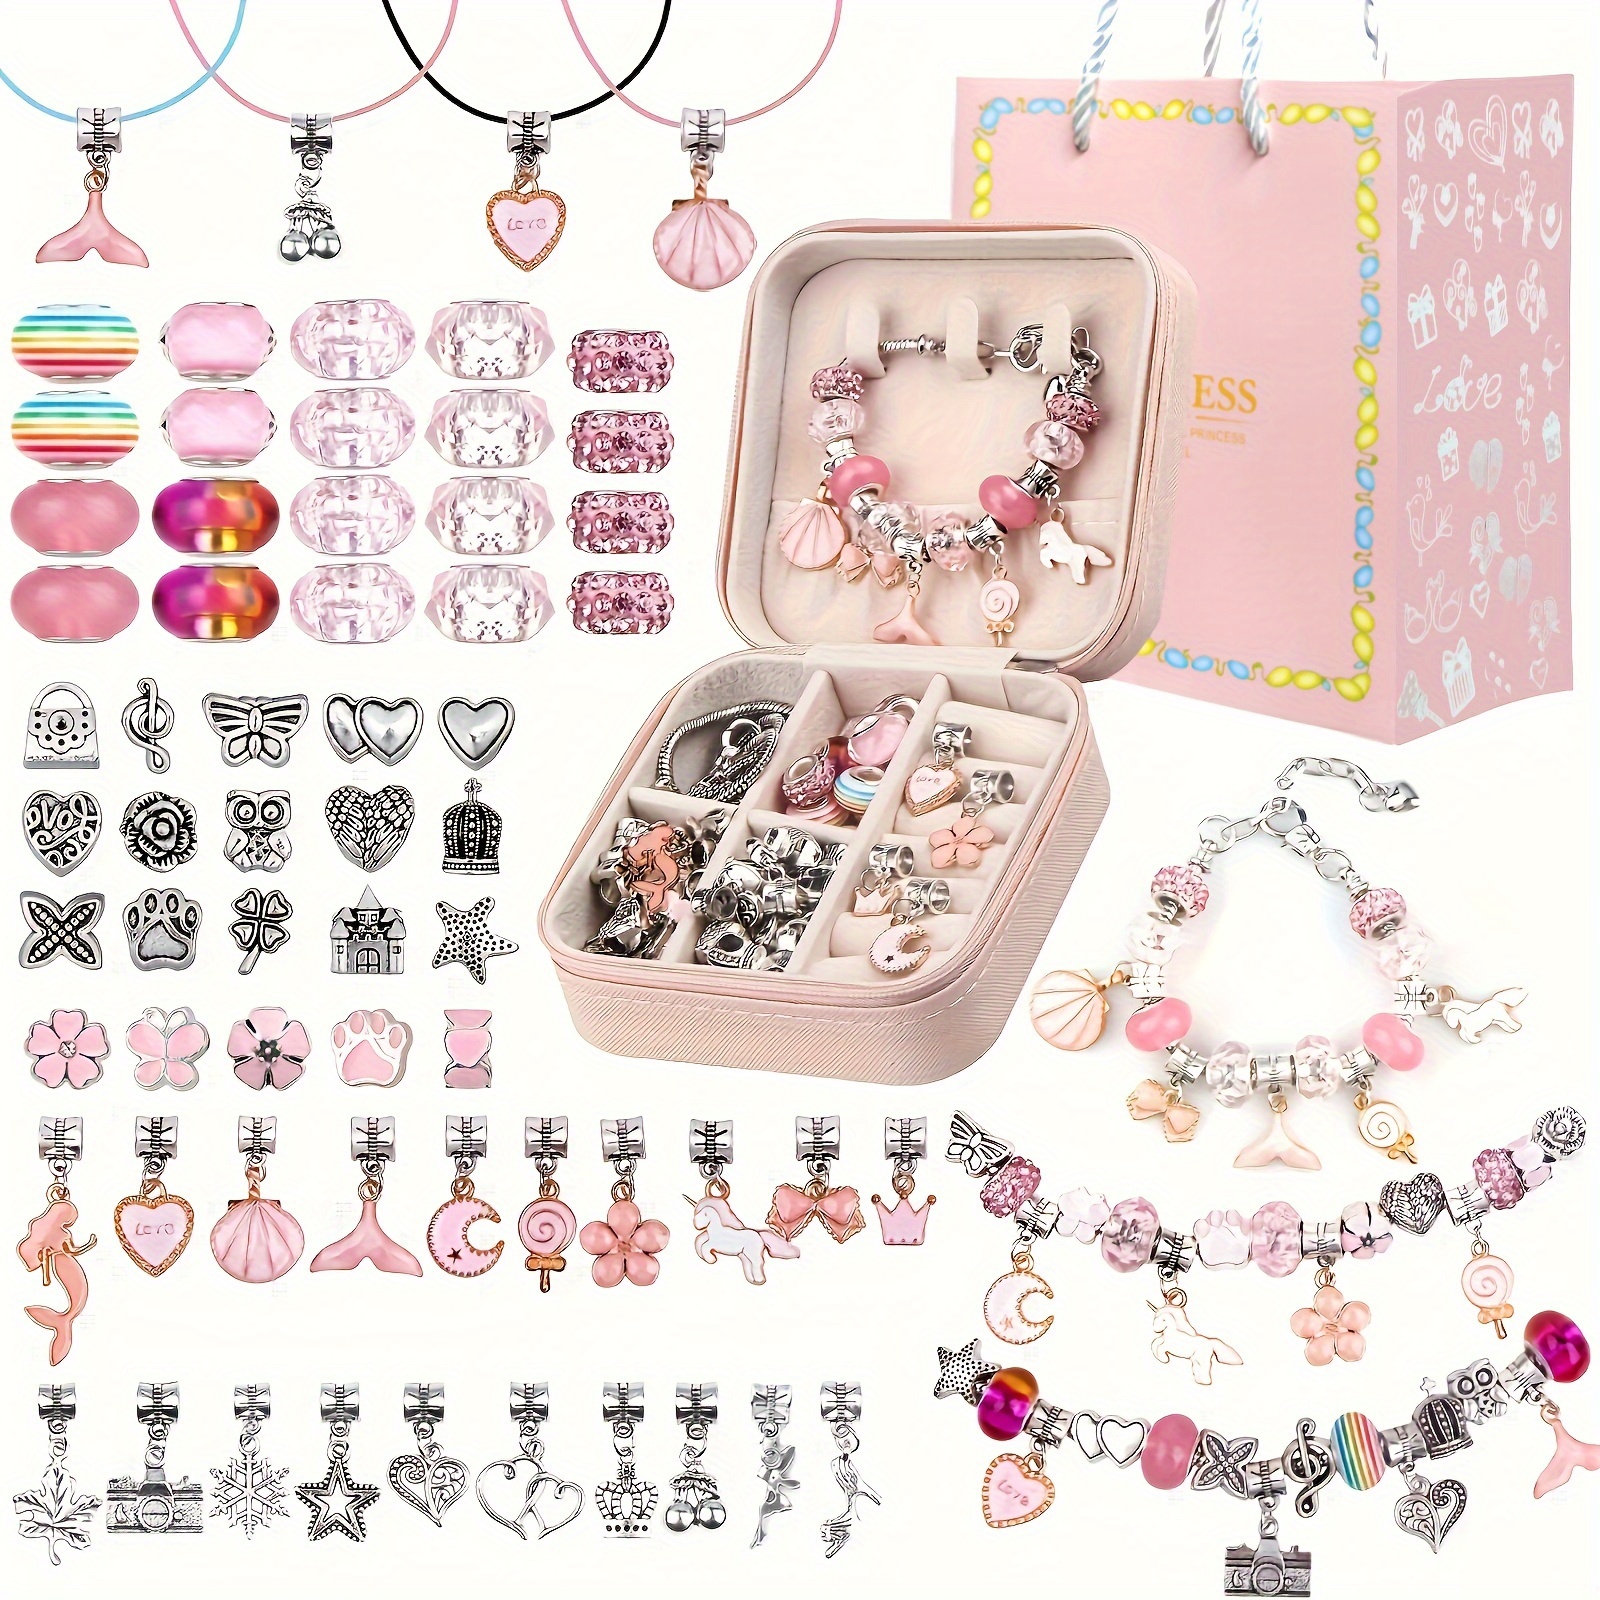 

66 Pcs Charm Bracelet Making Kit - Girls Diy Beaded Jewelry Making Kit, Mermaid Series Charms Gifts For Girls Toys Crafts Diy Bracelet Making Gift Box